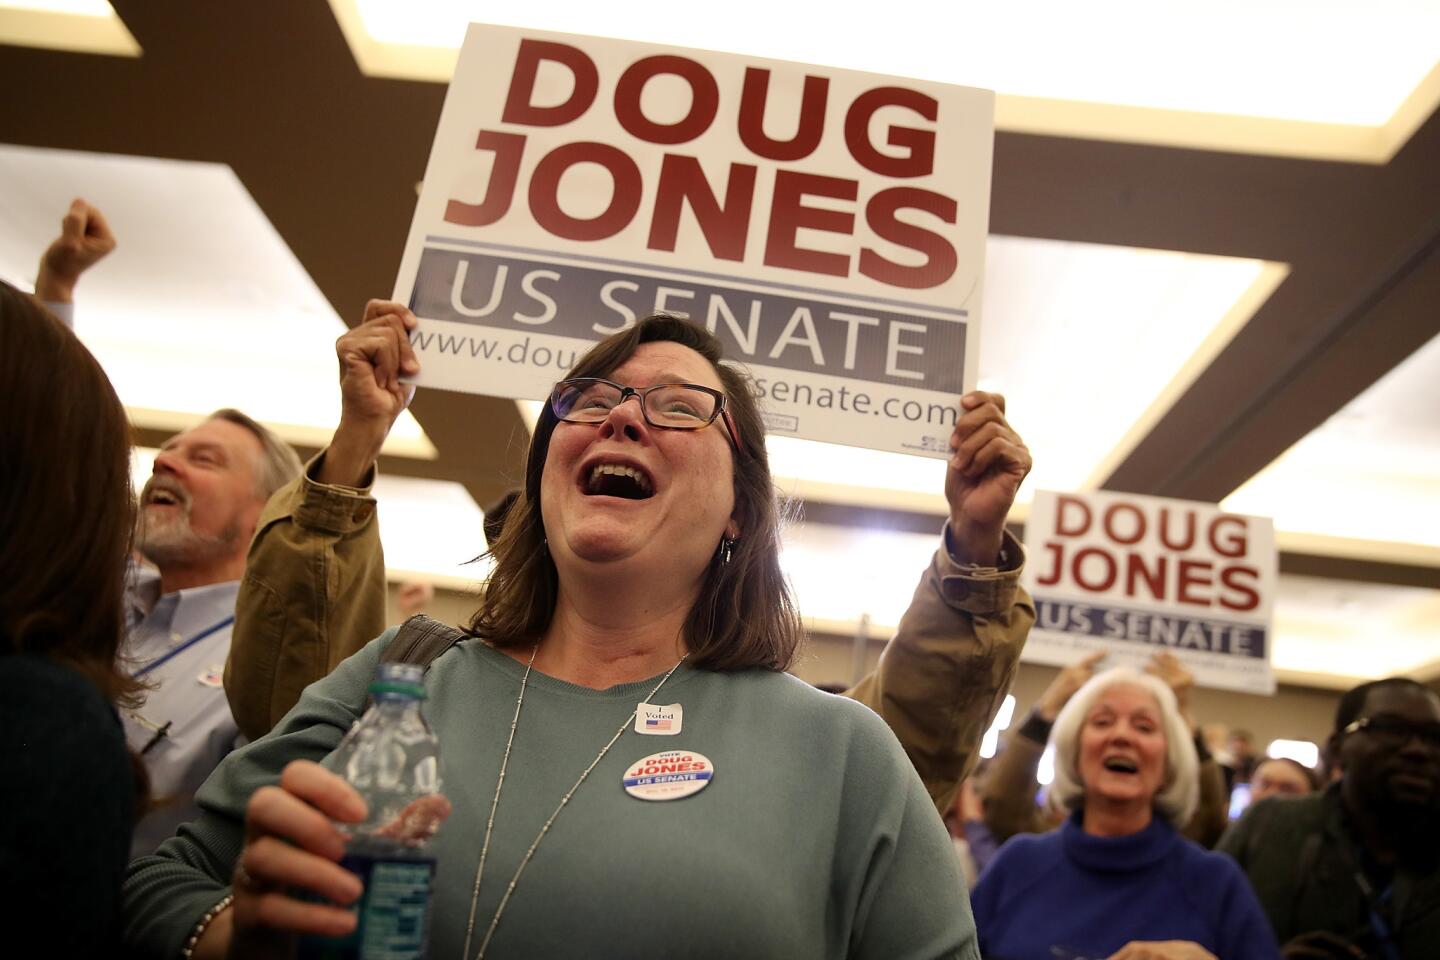 Doug Jones supporter